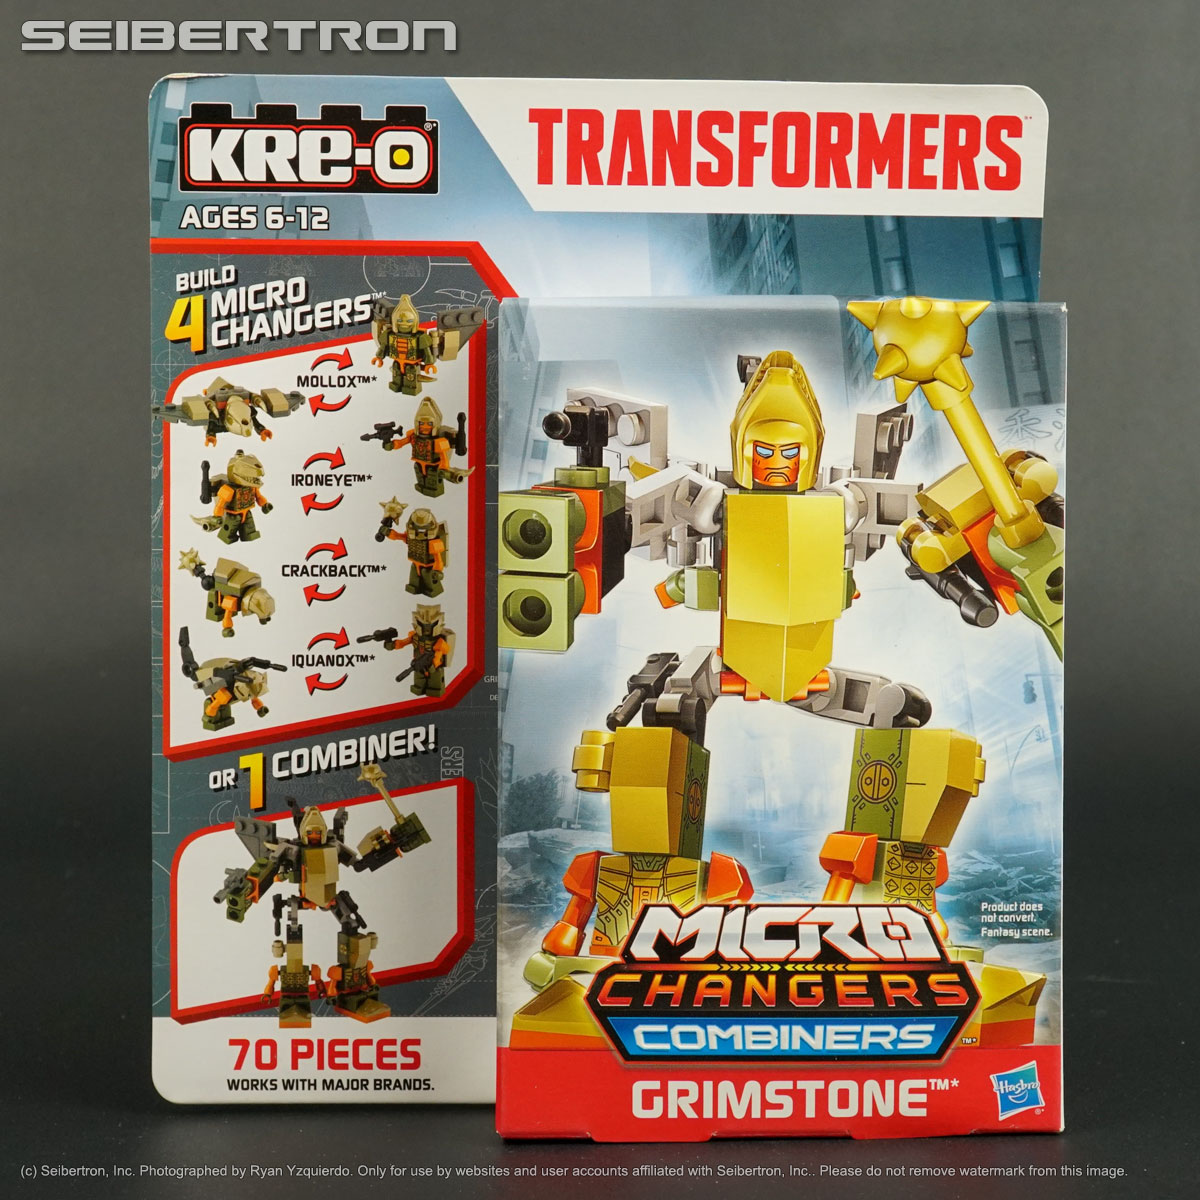 GRIMSTONE Transformers Kre-o Micro-Changers Combiner Hasbro 2014 New